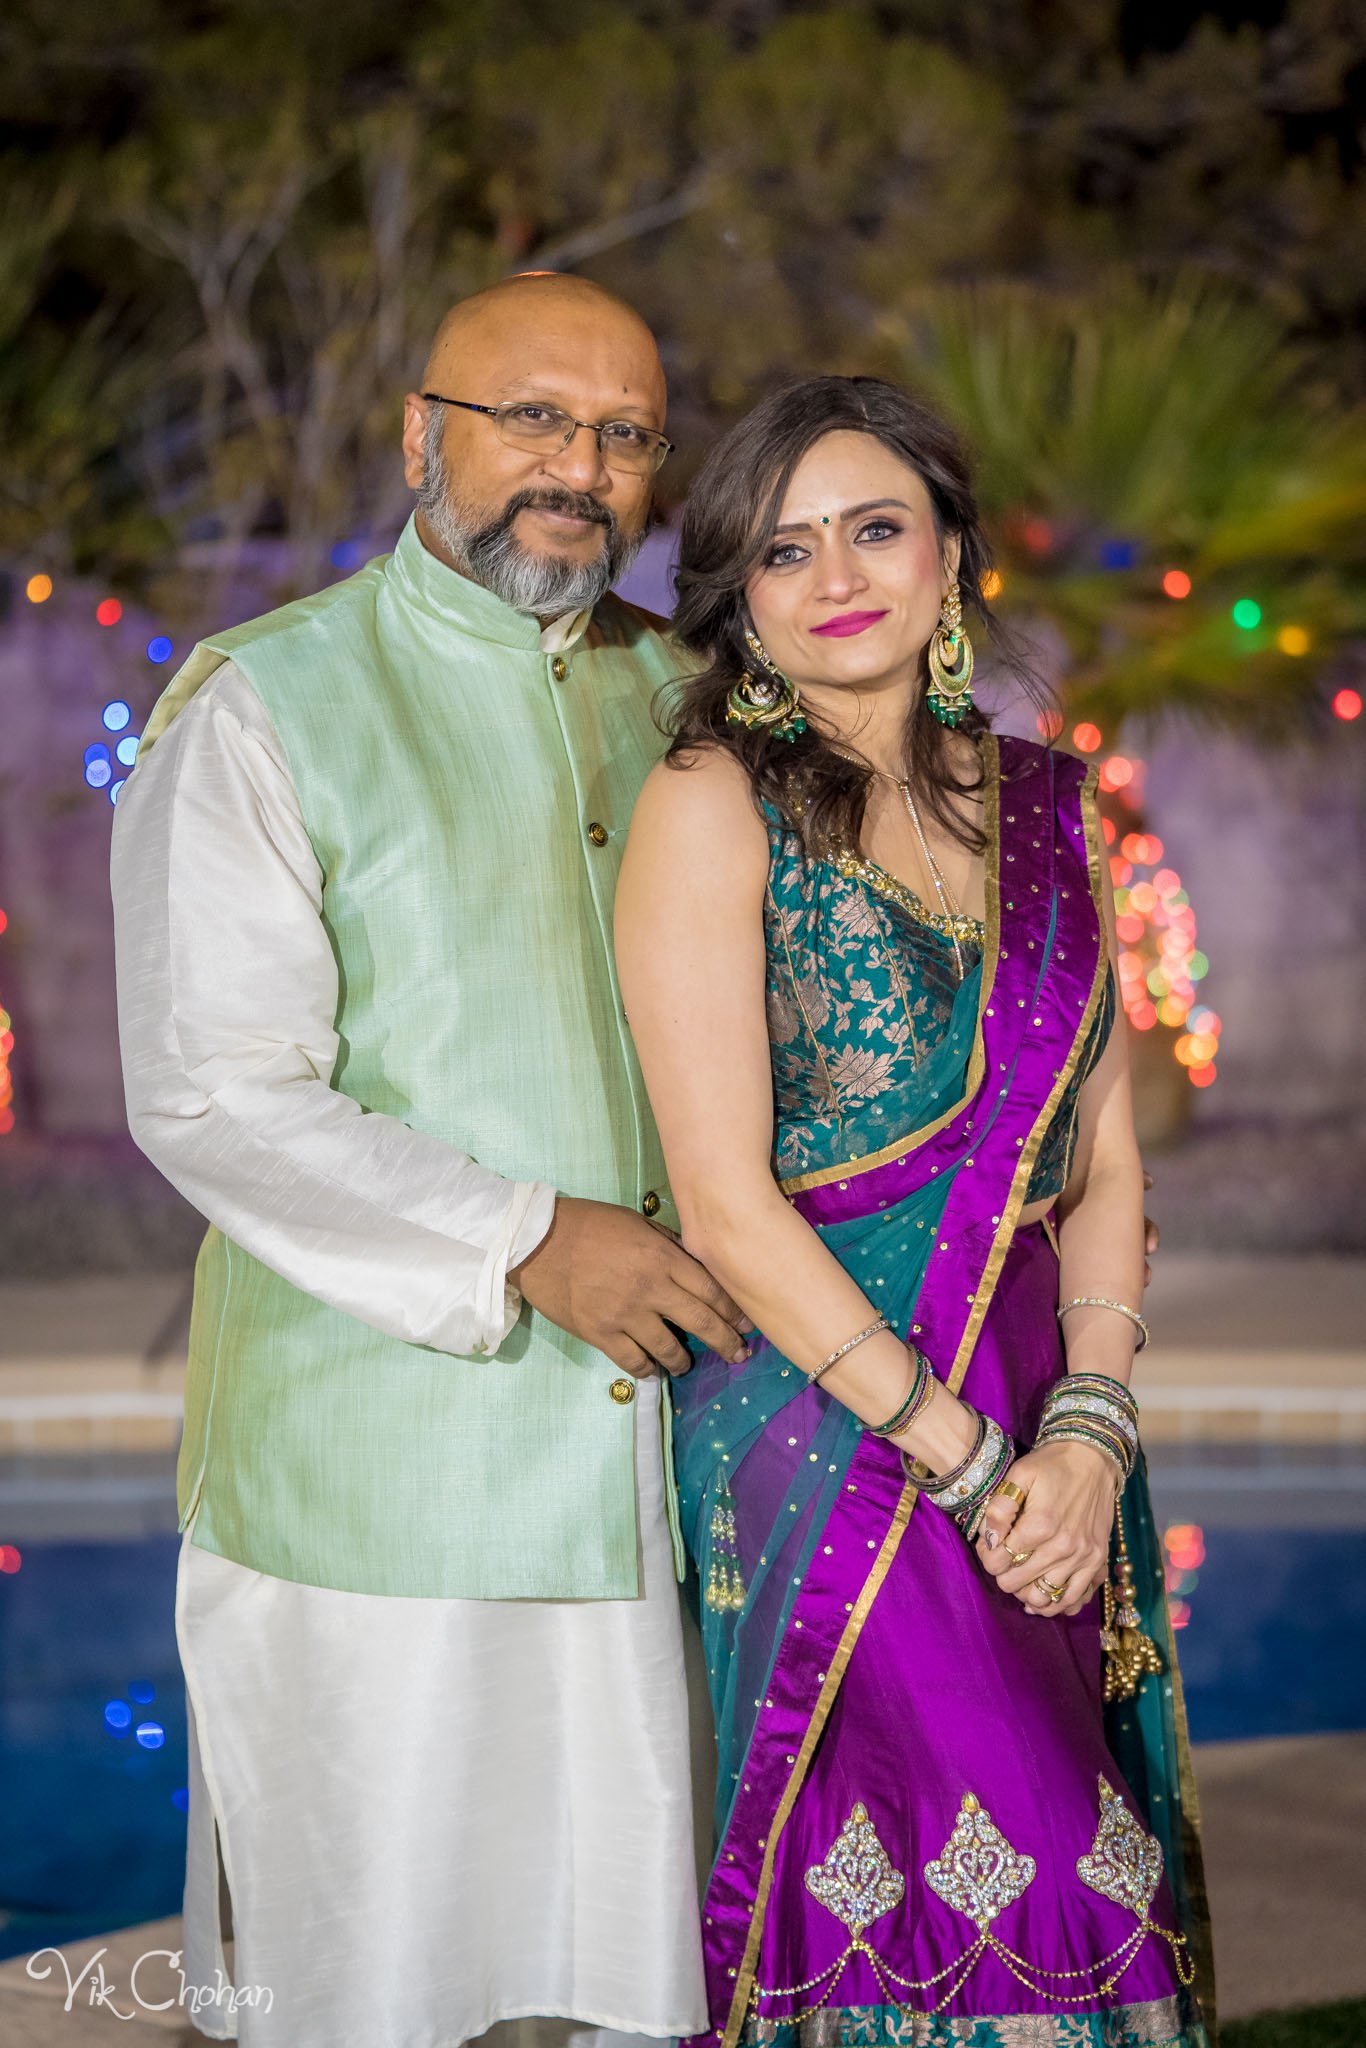 2022-02-04-Hely-&-Parth-Garba-Night-Indian-Wedding-Vik-Chohan-Photography-Photo-Booth-Social-Media-VCP-191.jpg